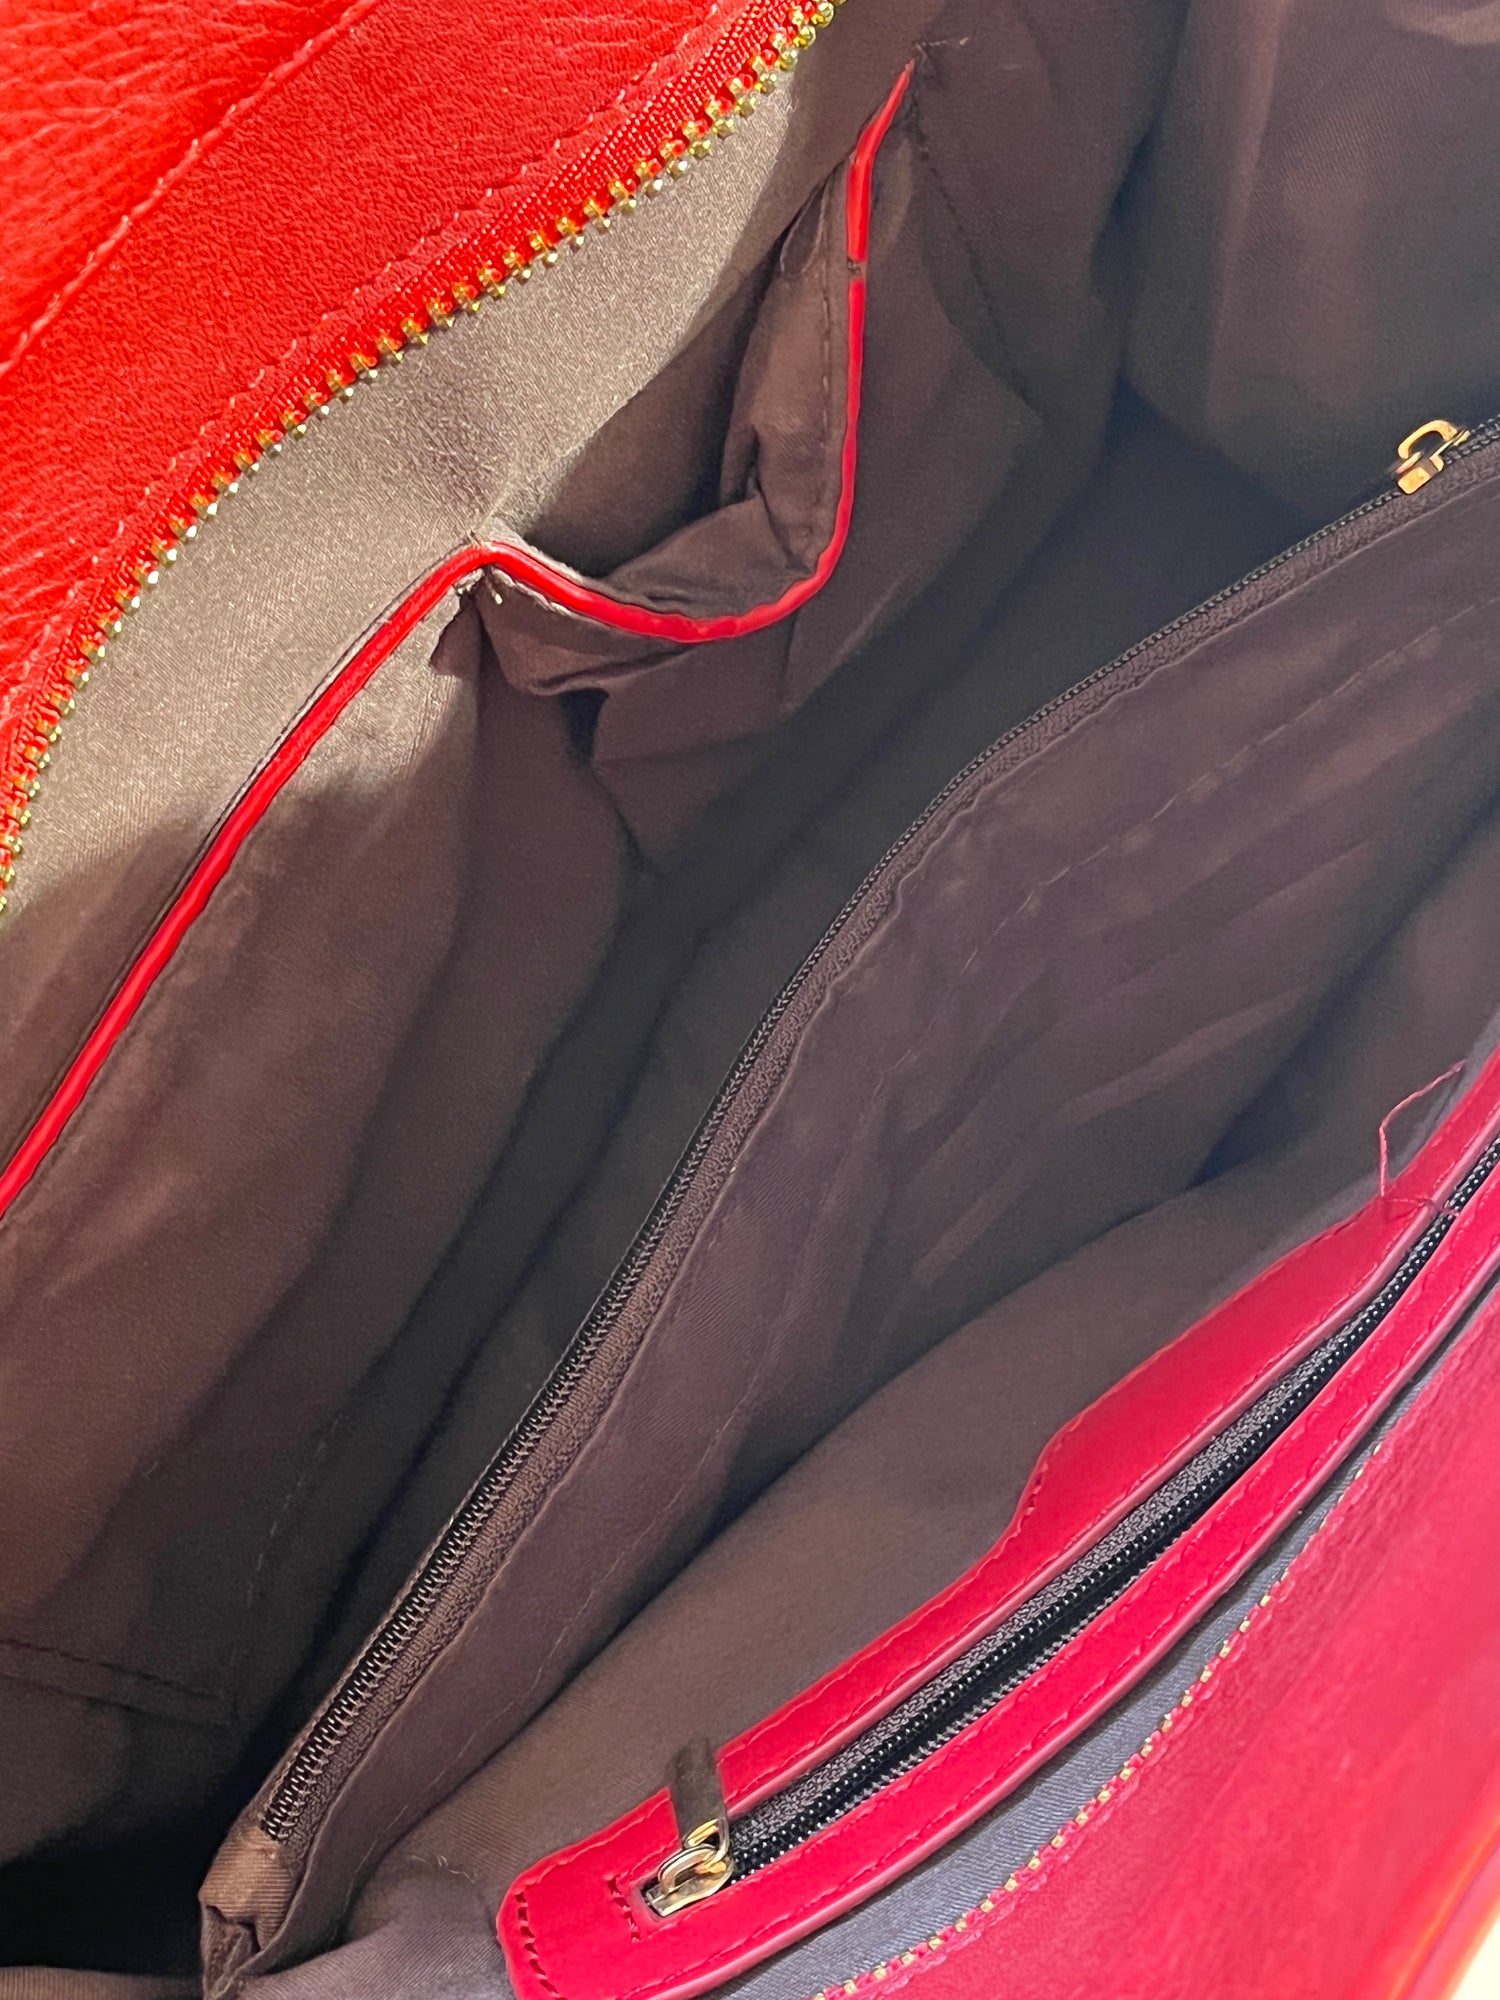 Mk side bag | Bags, Side bags, Michael kors bag